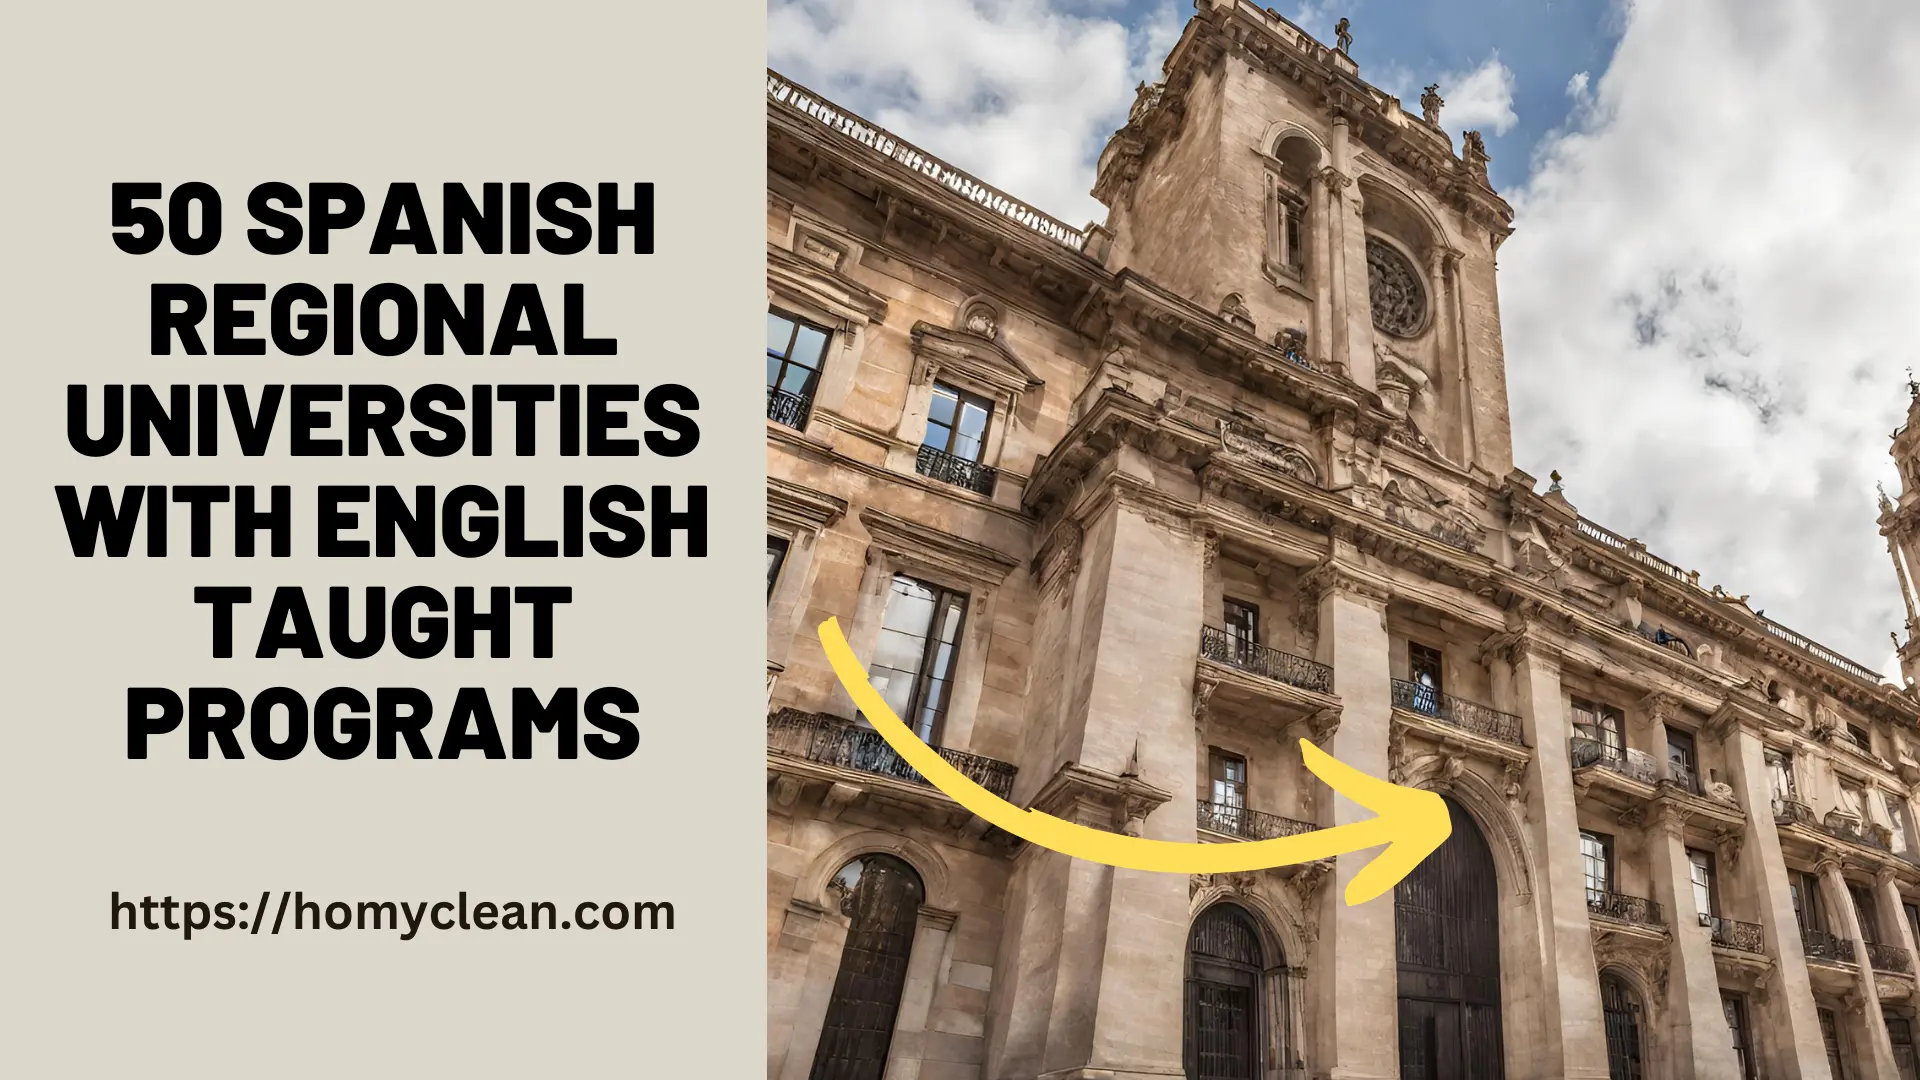 Spanish Regional Universities with English Taught Programs